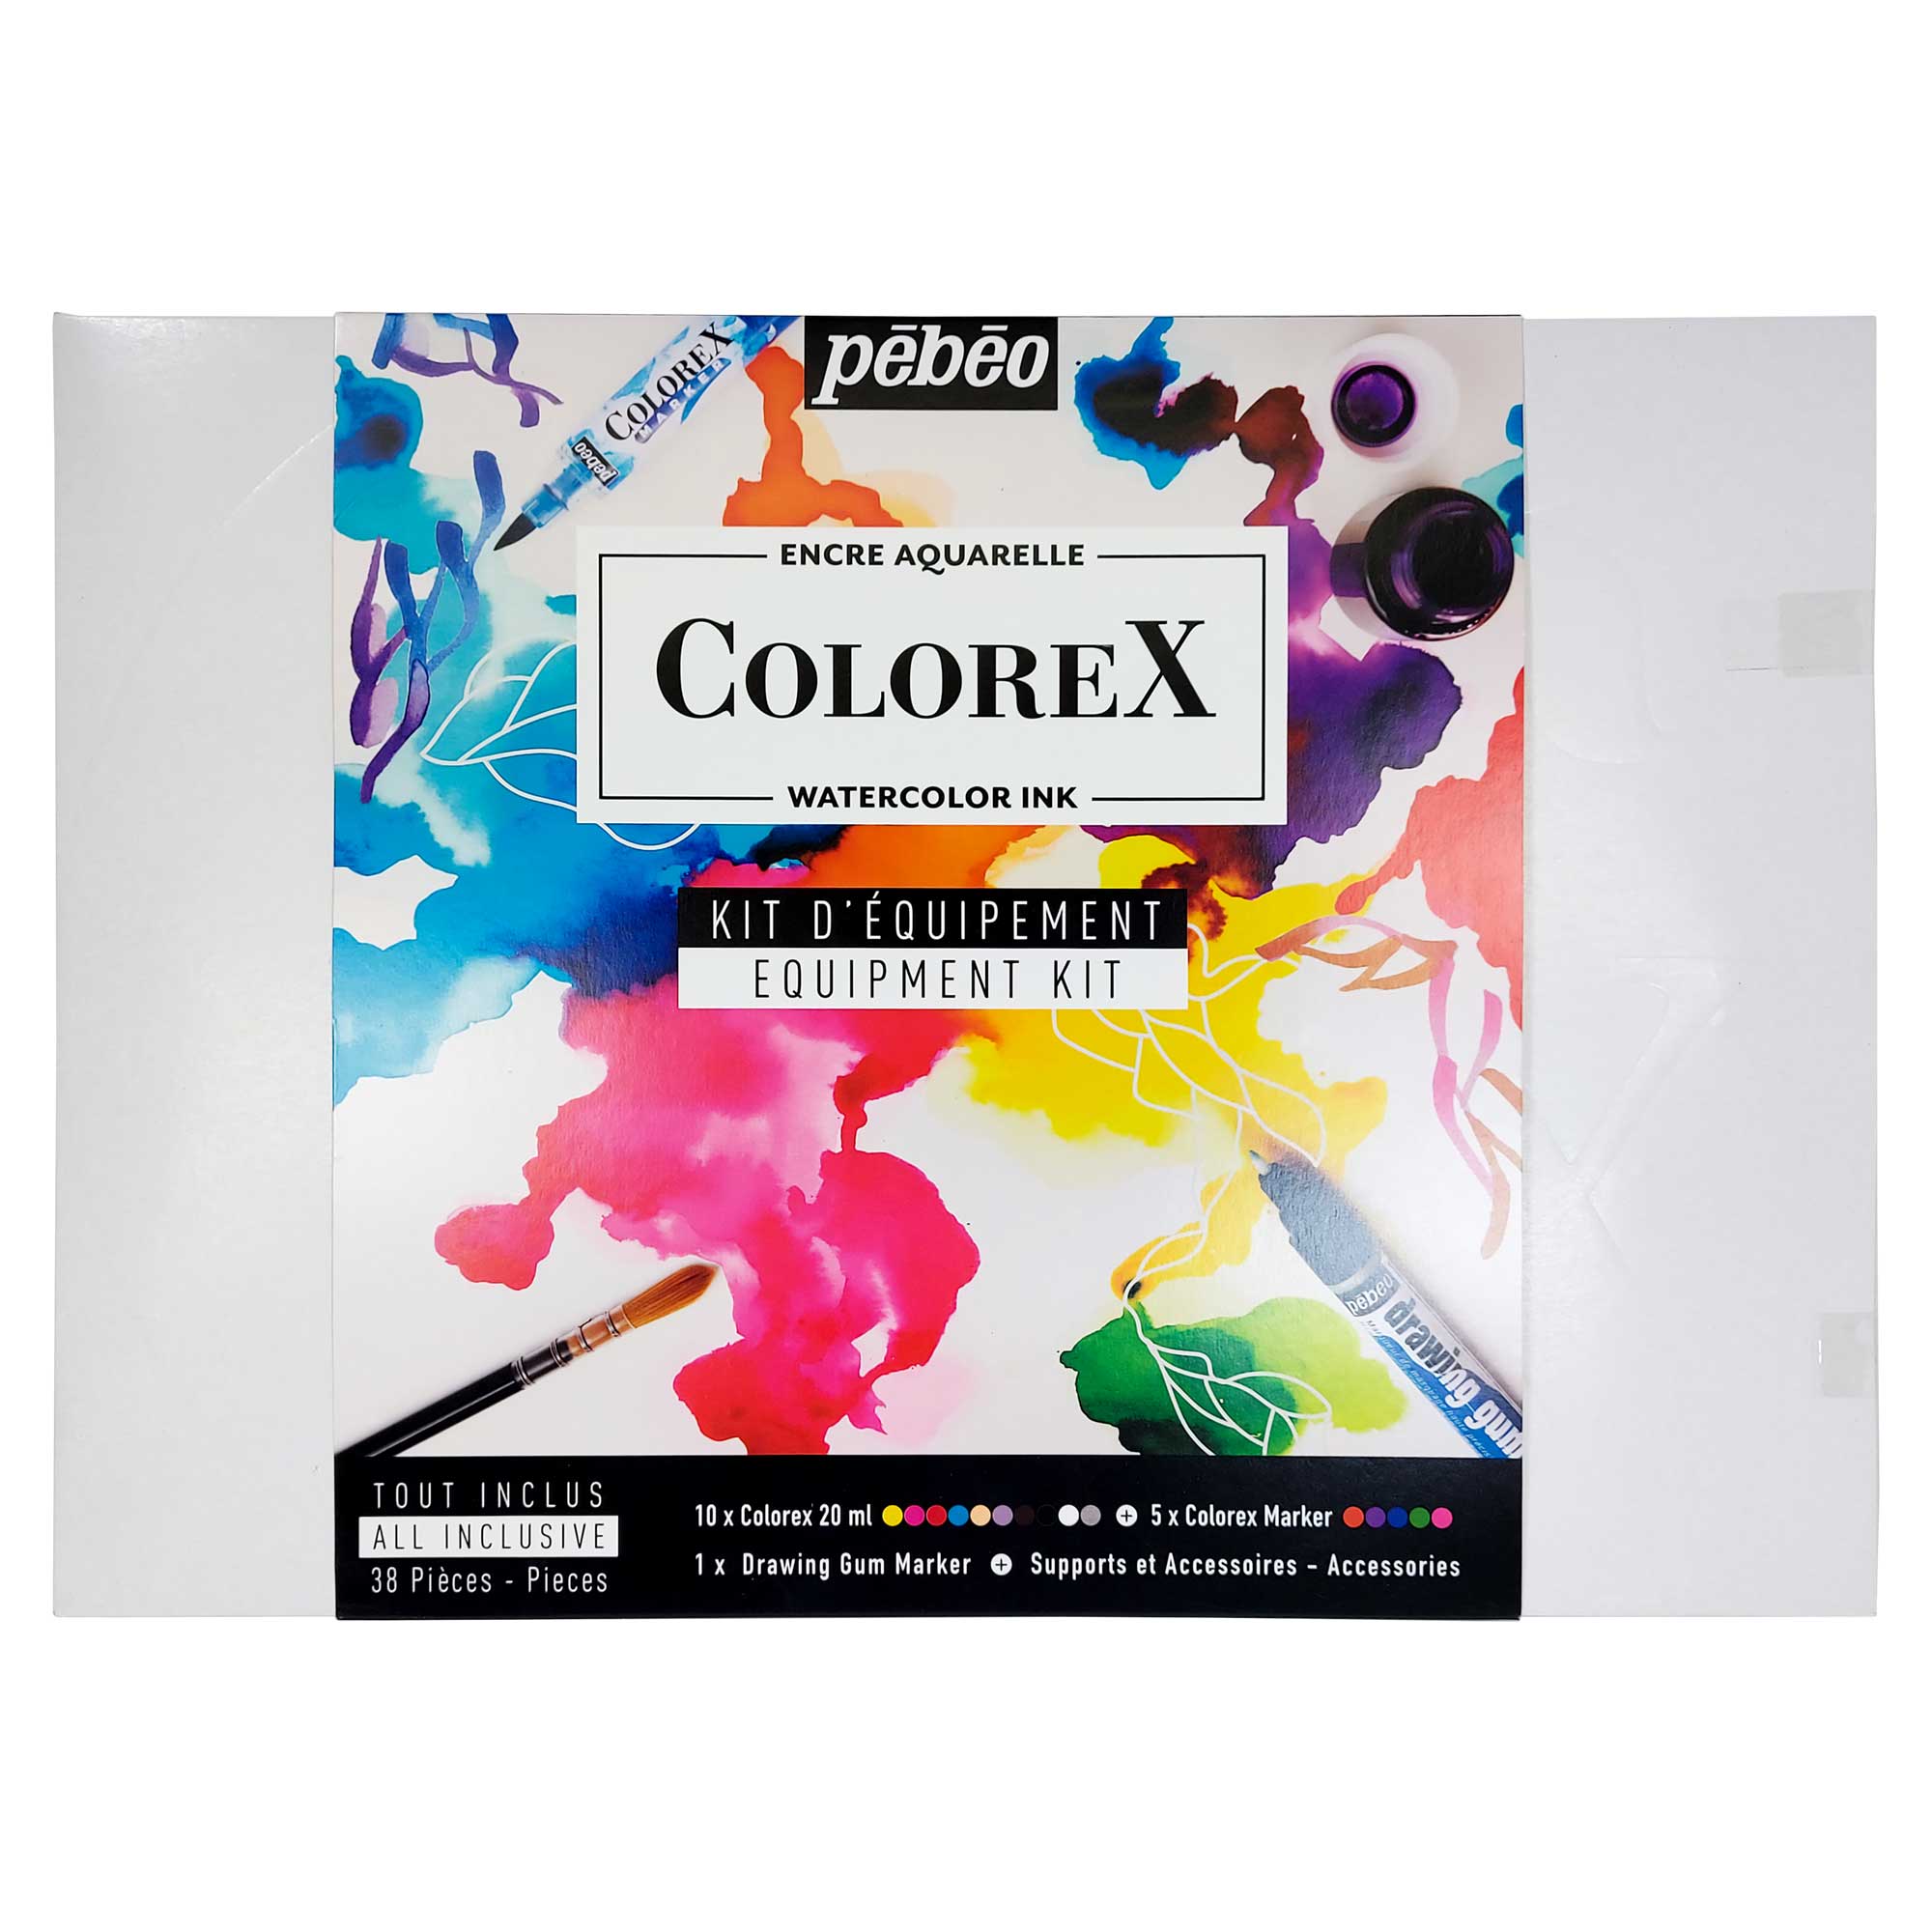 Pebeo Colorex Watercolour Ink Equipment Kit